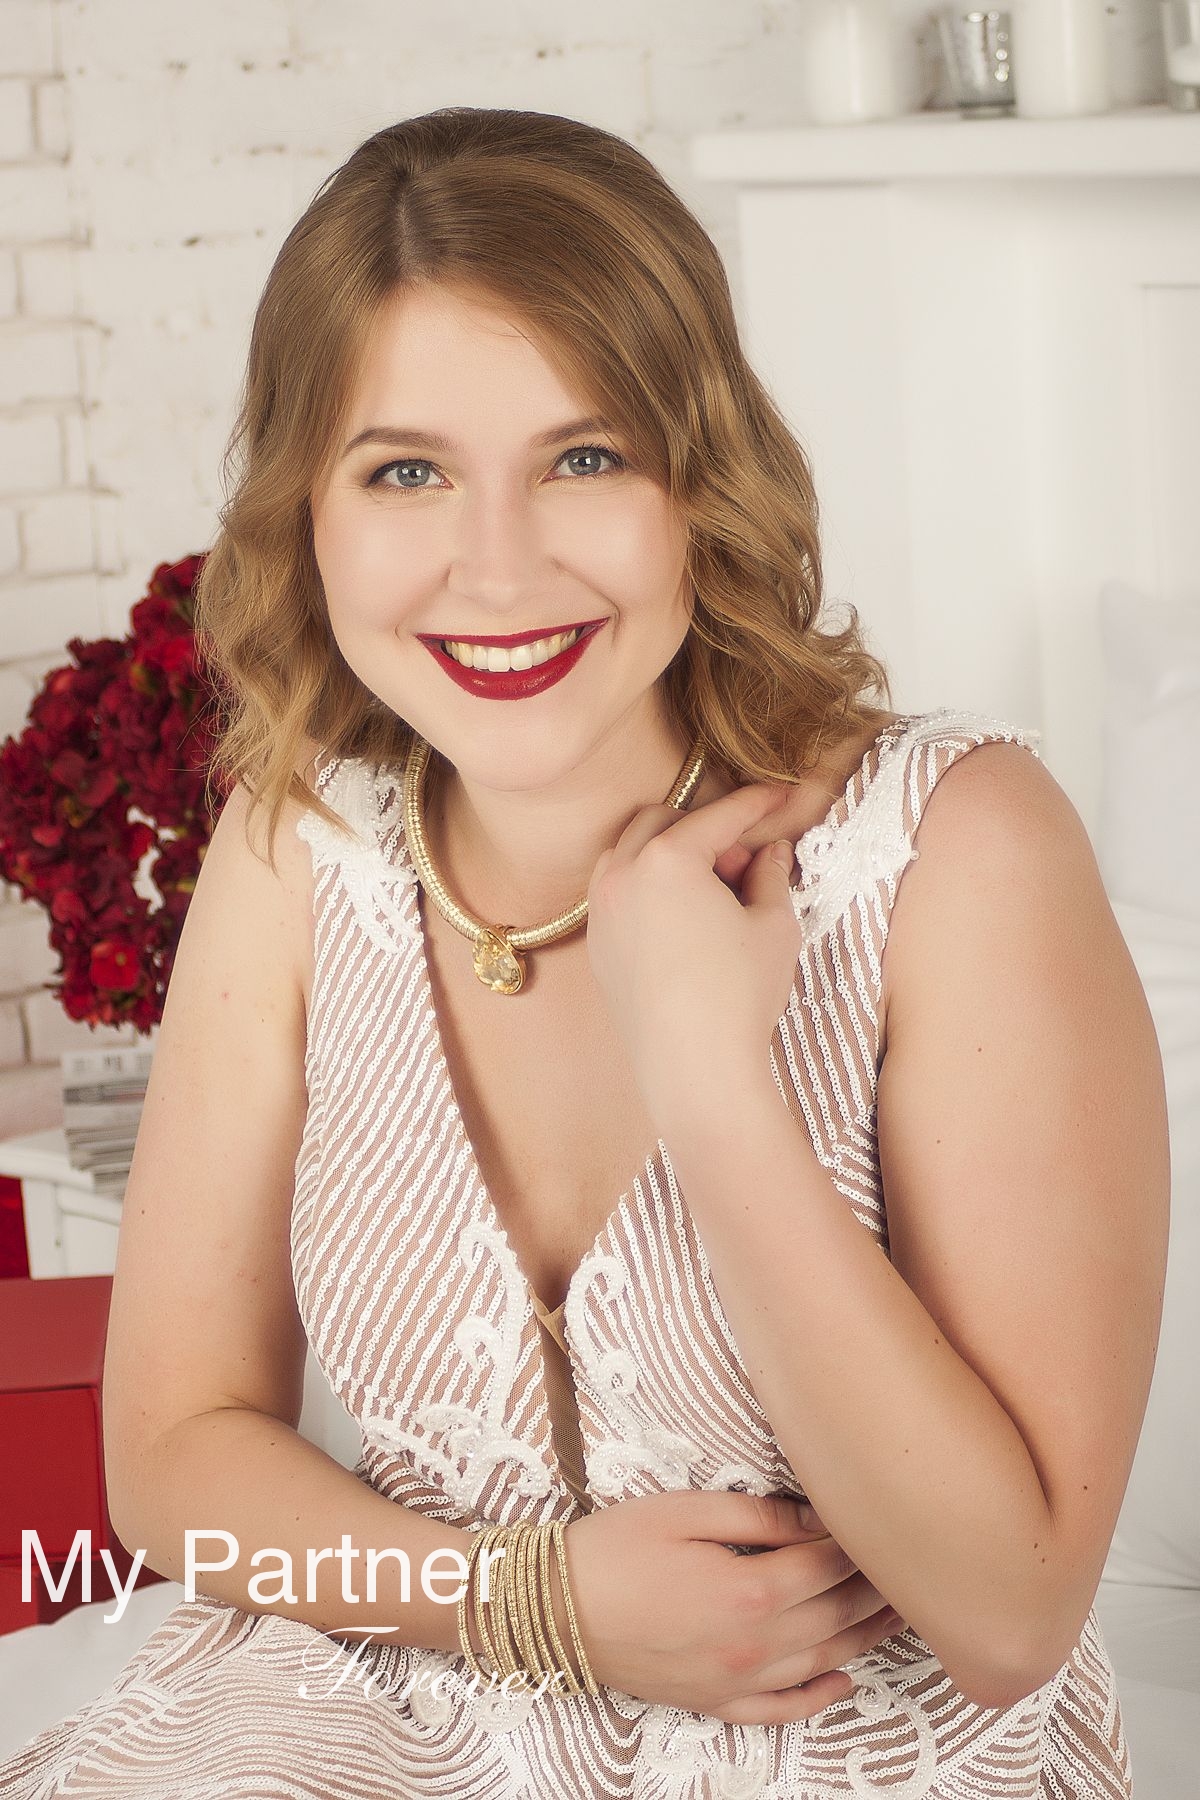 Dating Site to Meet Stunning Ukrainian Woman Aleksandra from Kiev, Ukraine